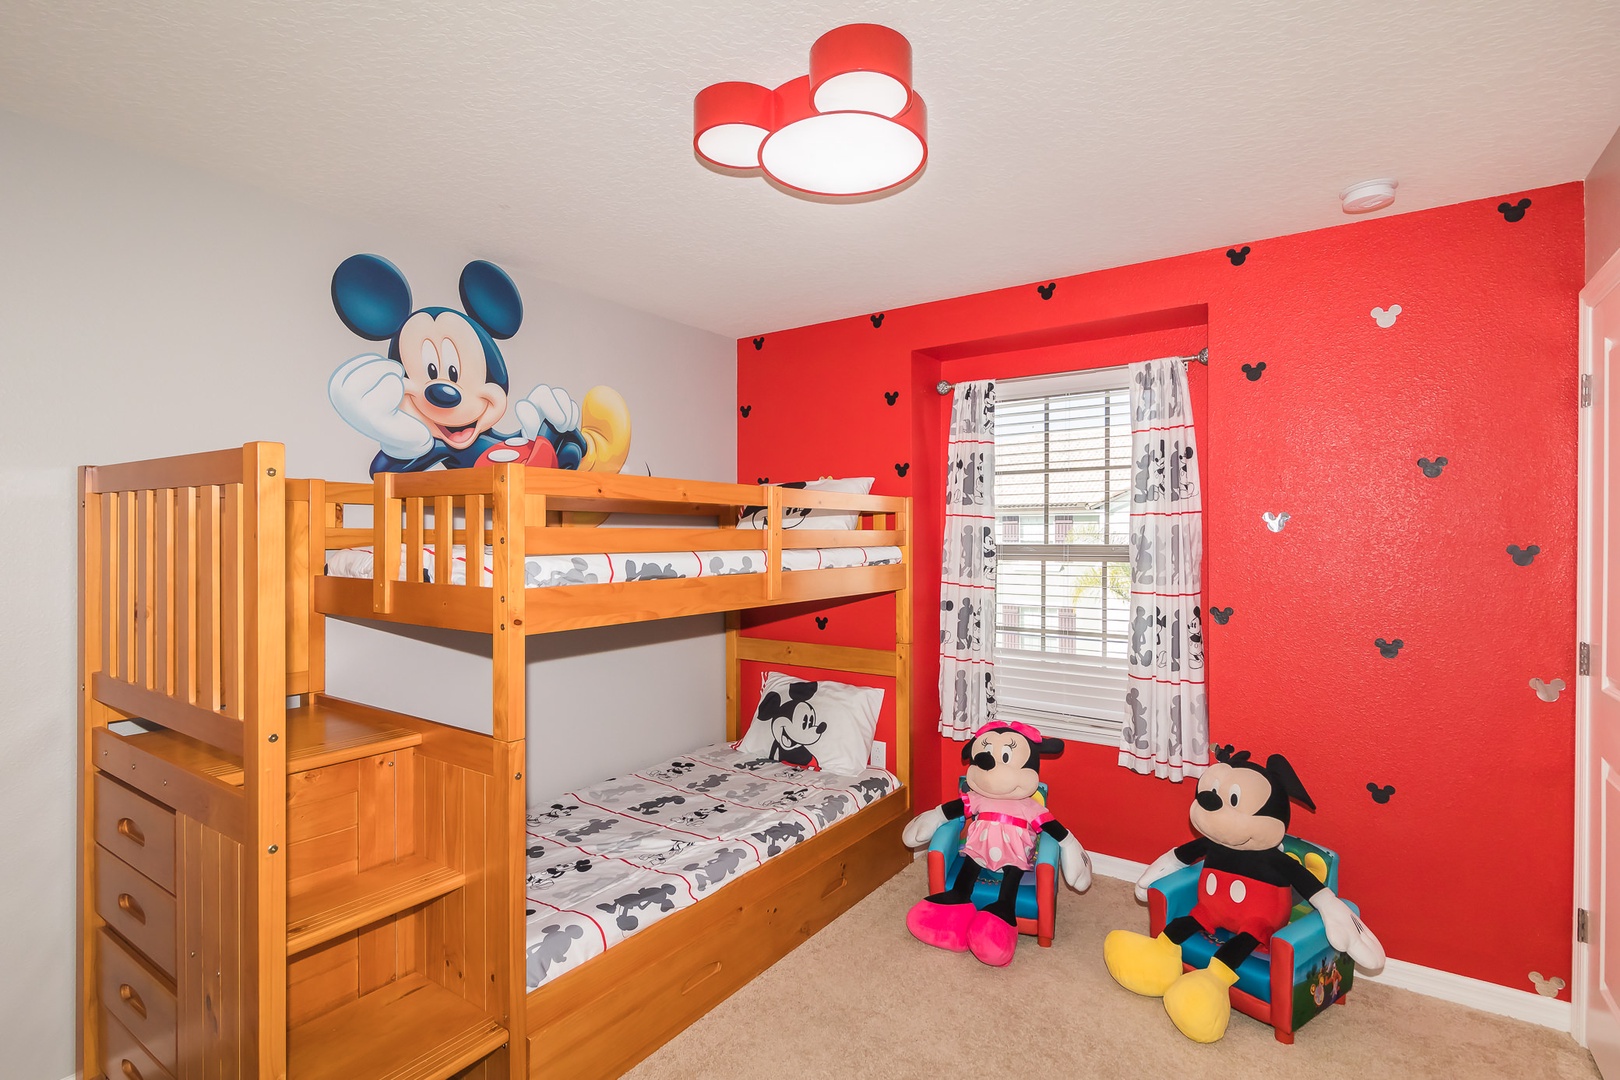 Oh boy! A Mickey themed room